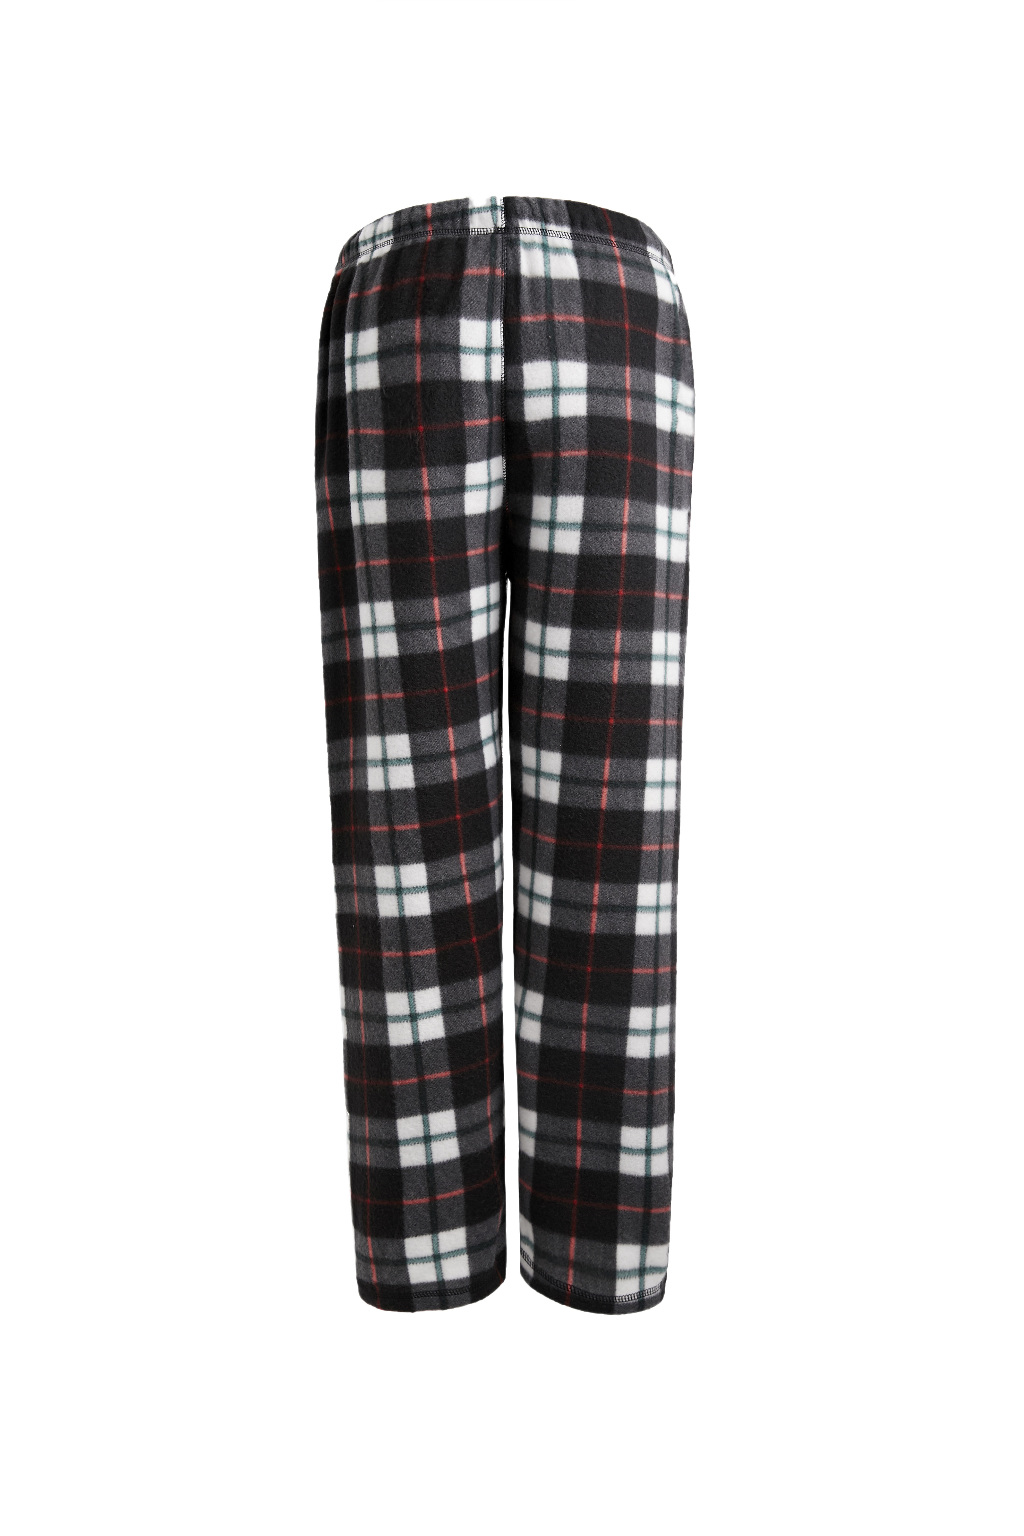 Men's Fleece Pajama Pants - 3X-5X, Black/Red Plaid